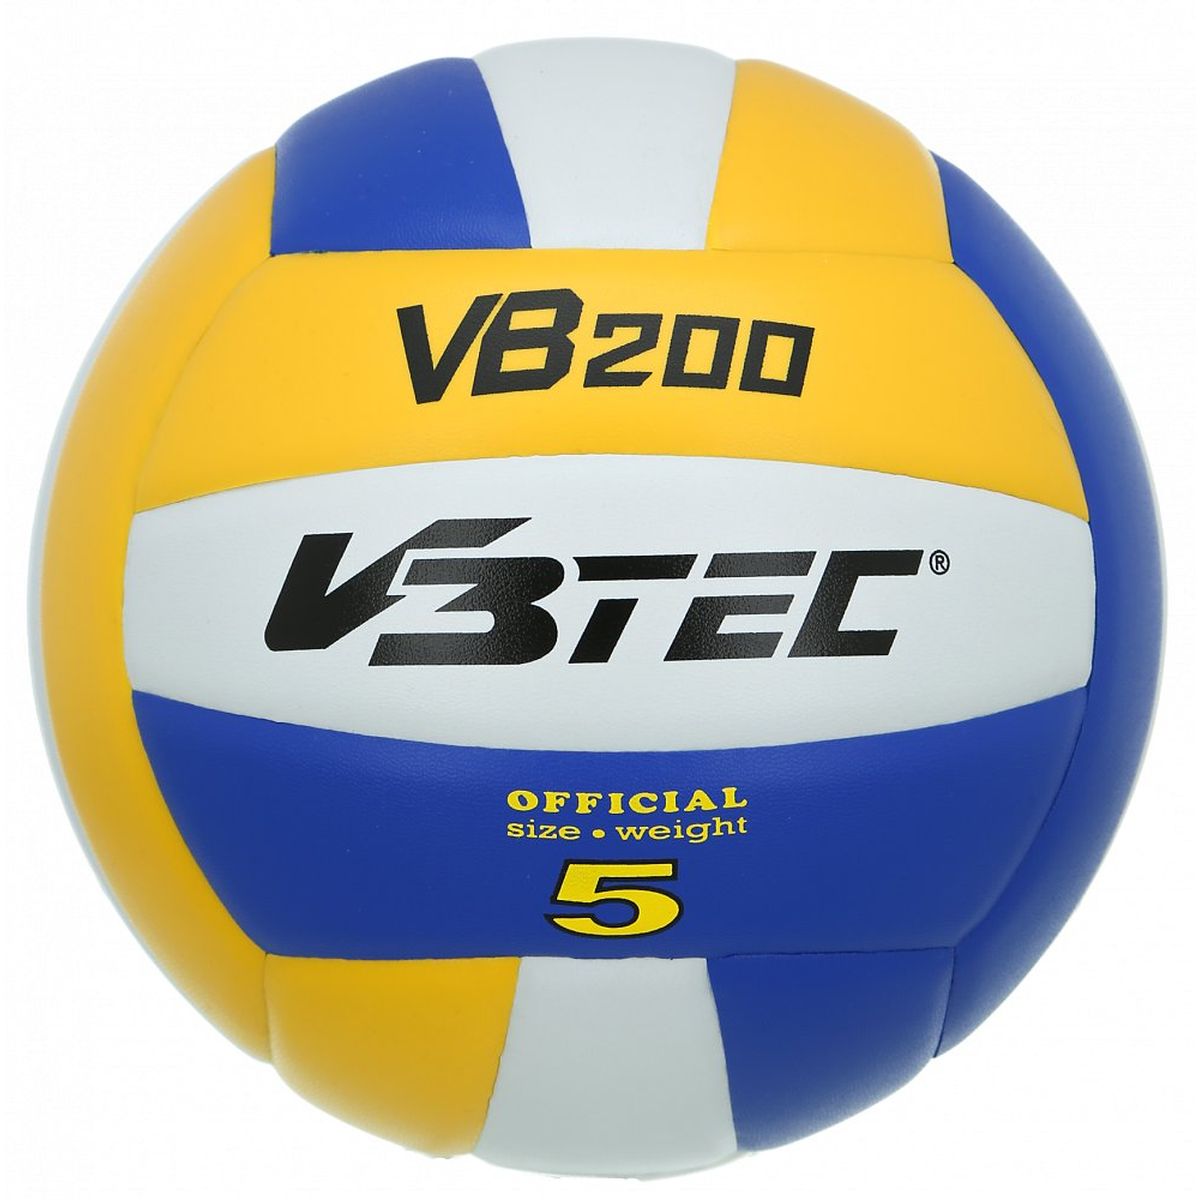 V3Tec VB 200 2.0 Volleyball Unisex